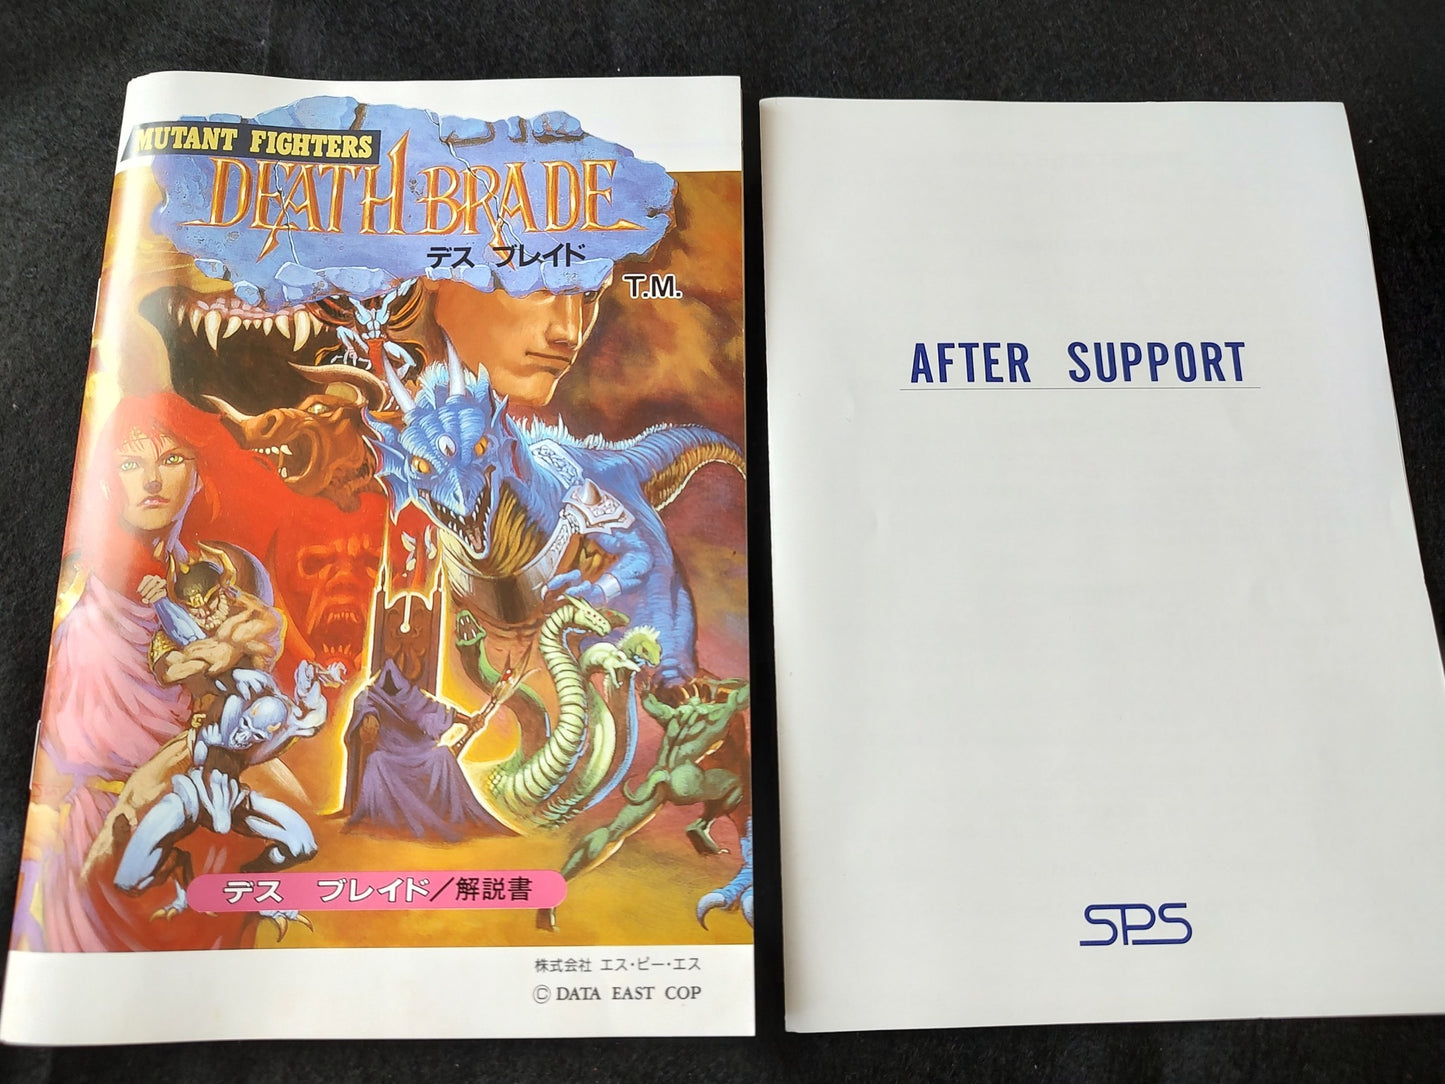 DEATH BRADE SHARP X68000 Game set/Gamedisk, Manual, Box set, Working-f0221-